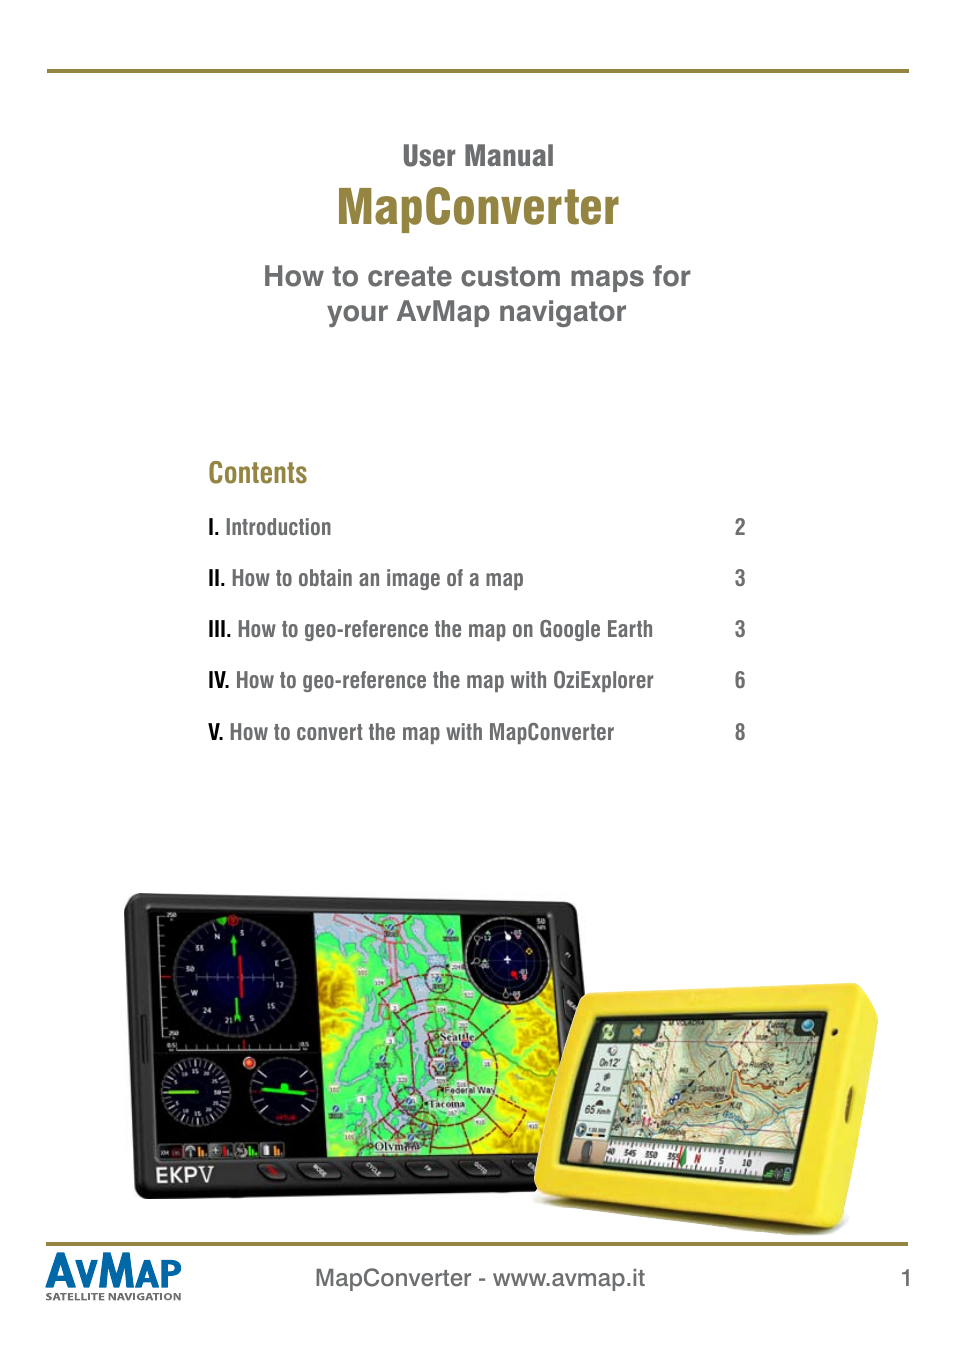 MapConverter